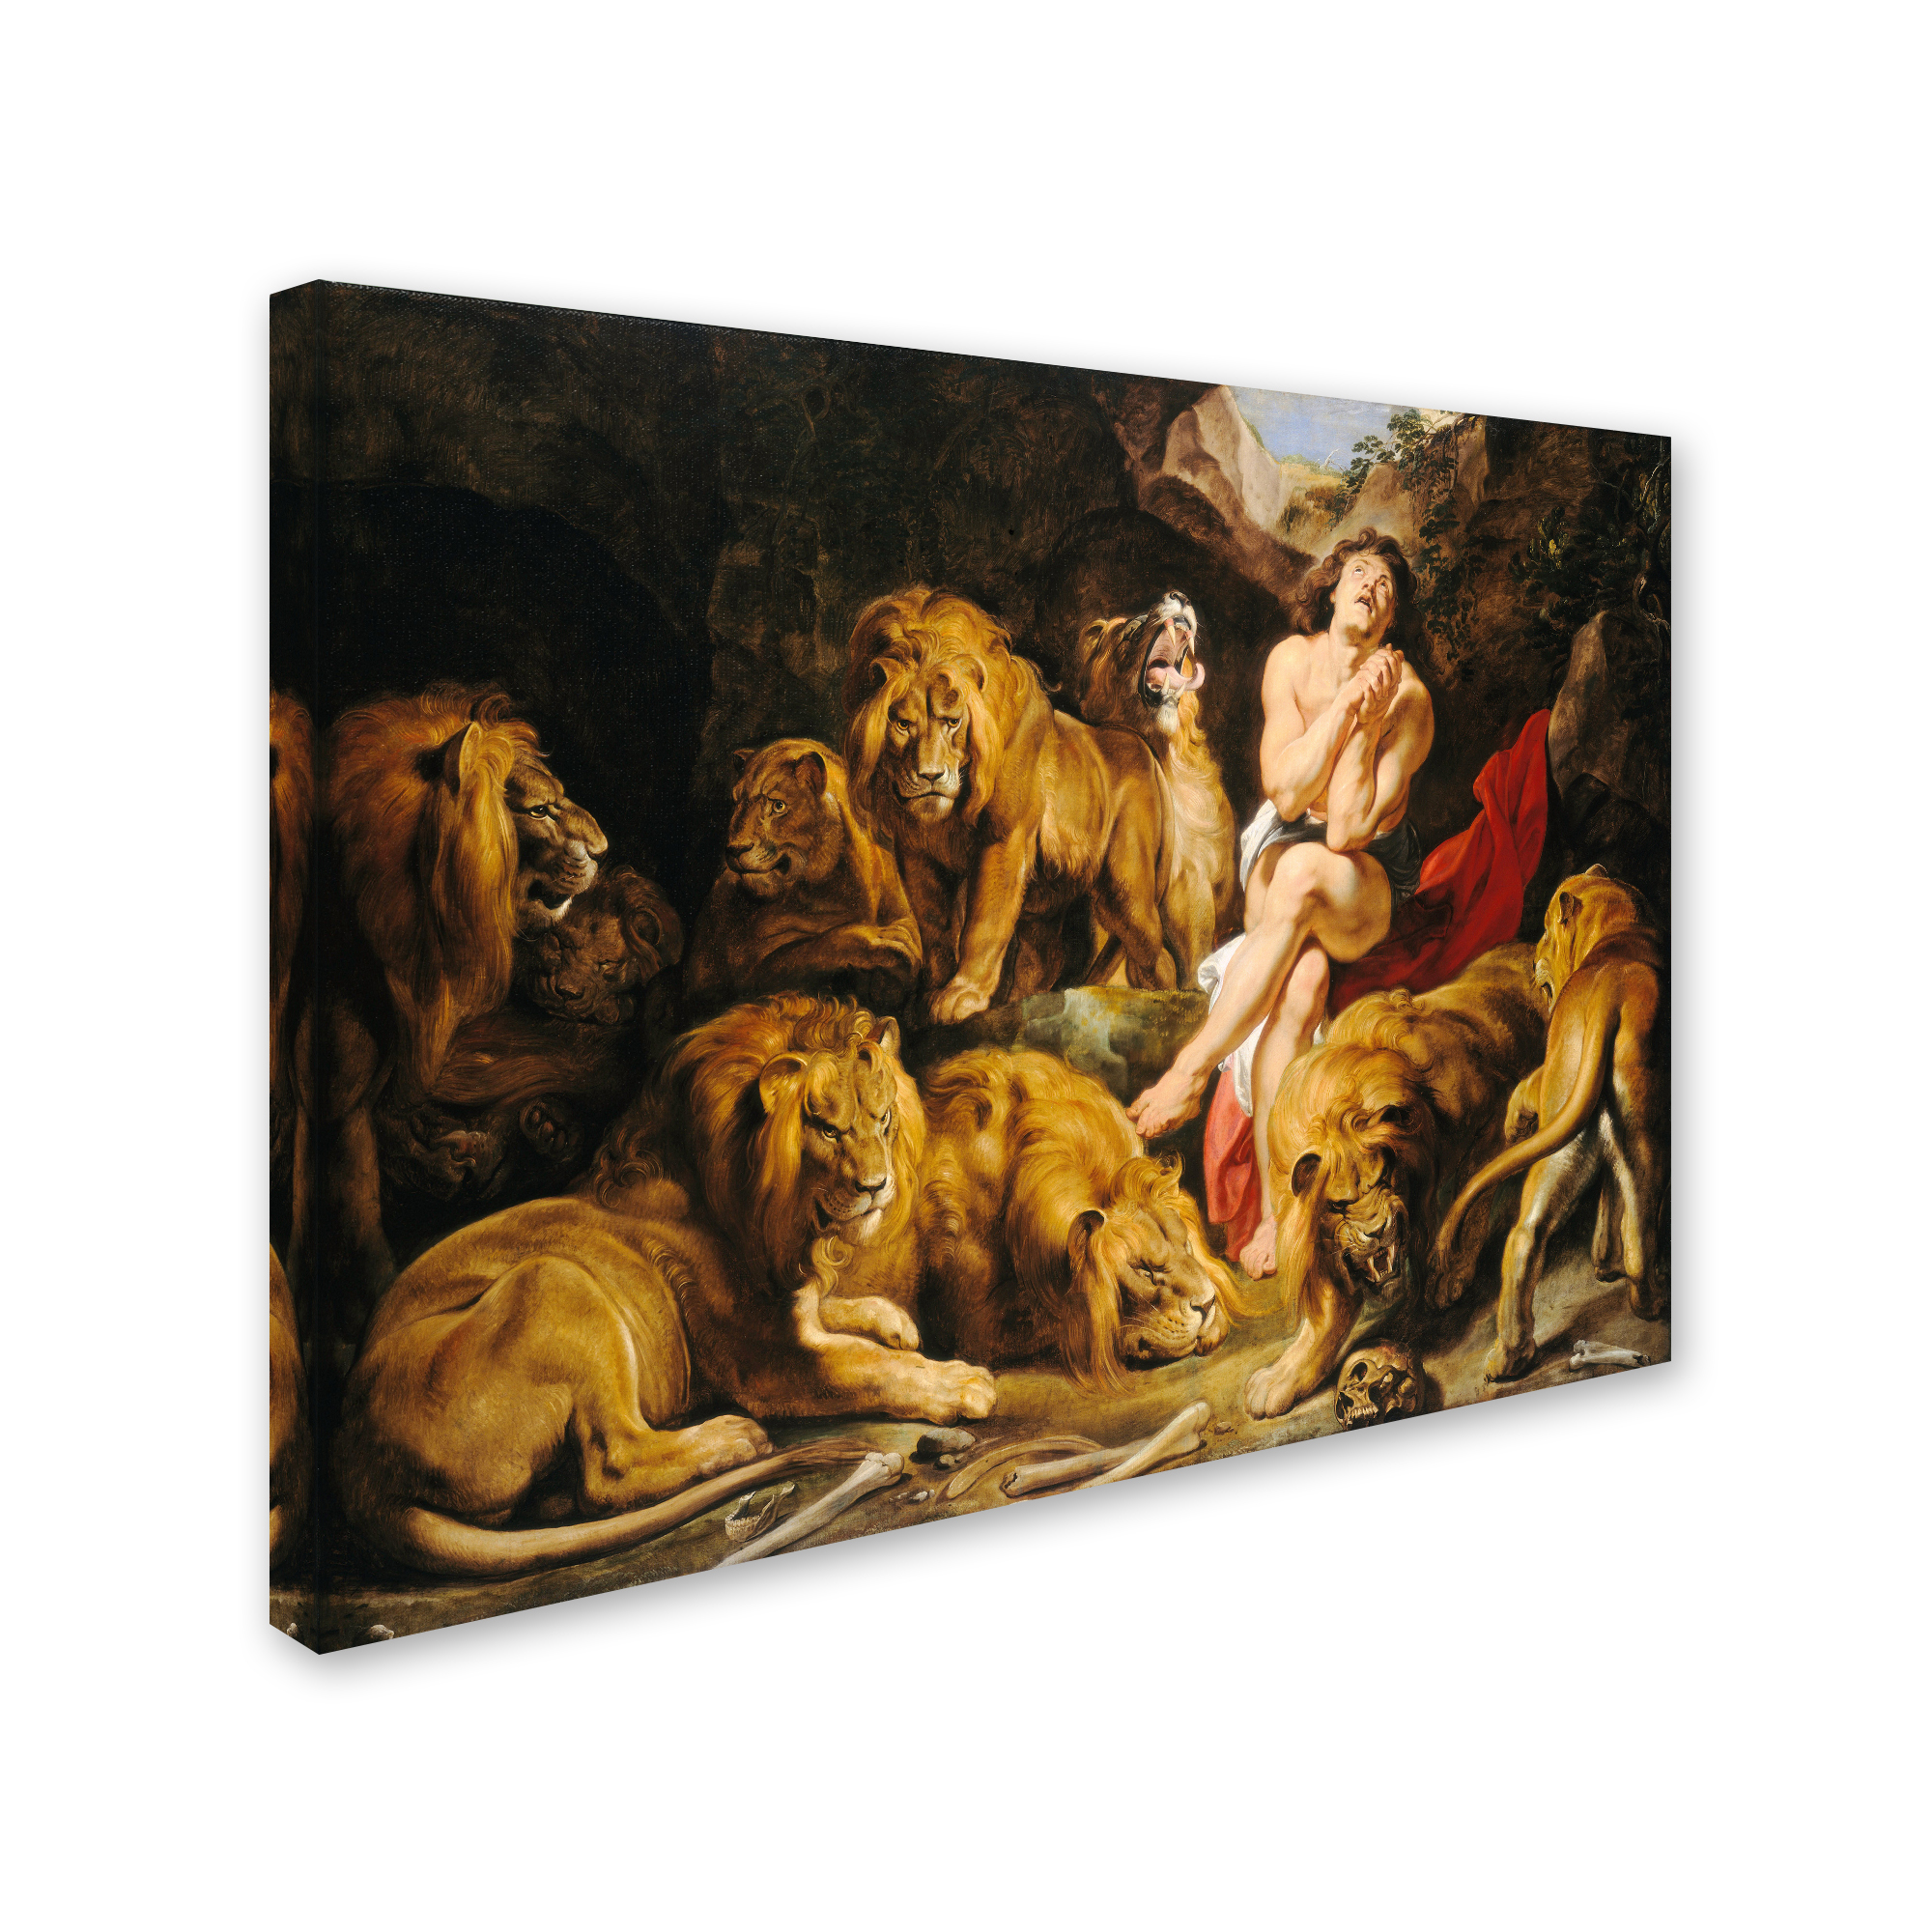 Trademark Fine Art 'Daniel In The Lions Den' Canvas Art by Peter Paul Rubens - image 2 of 3